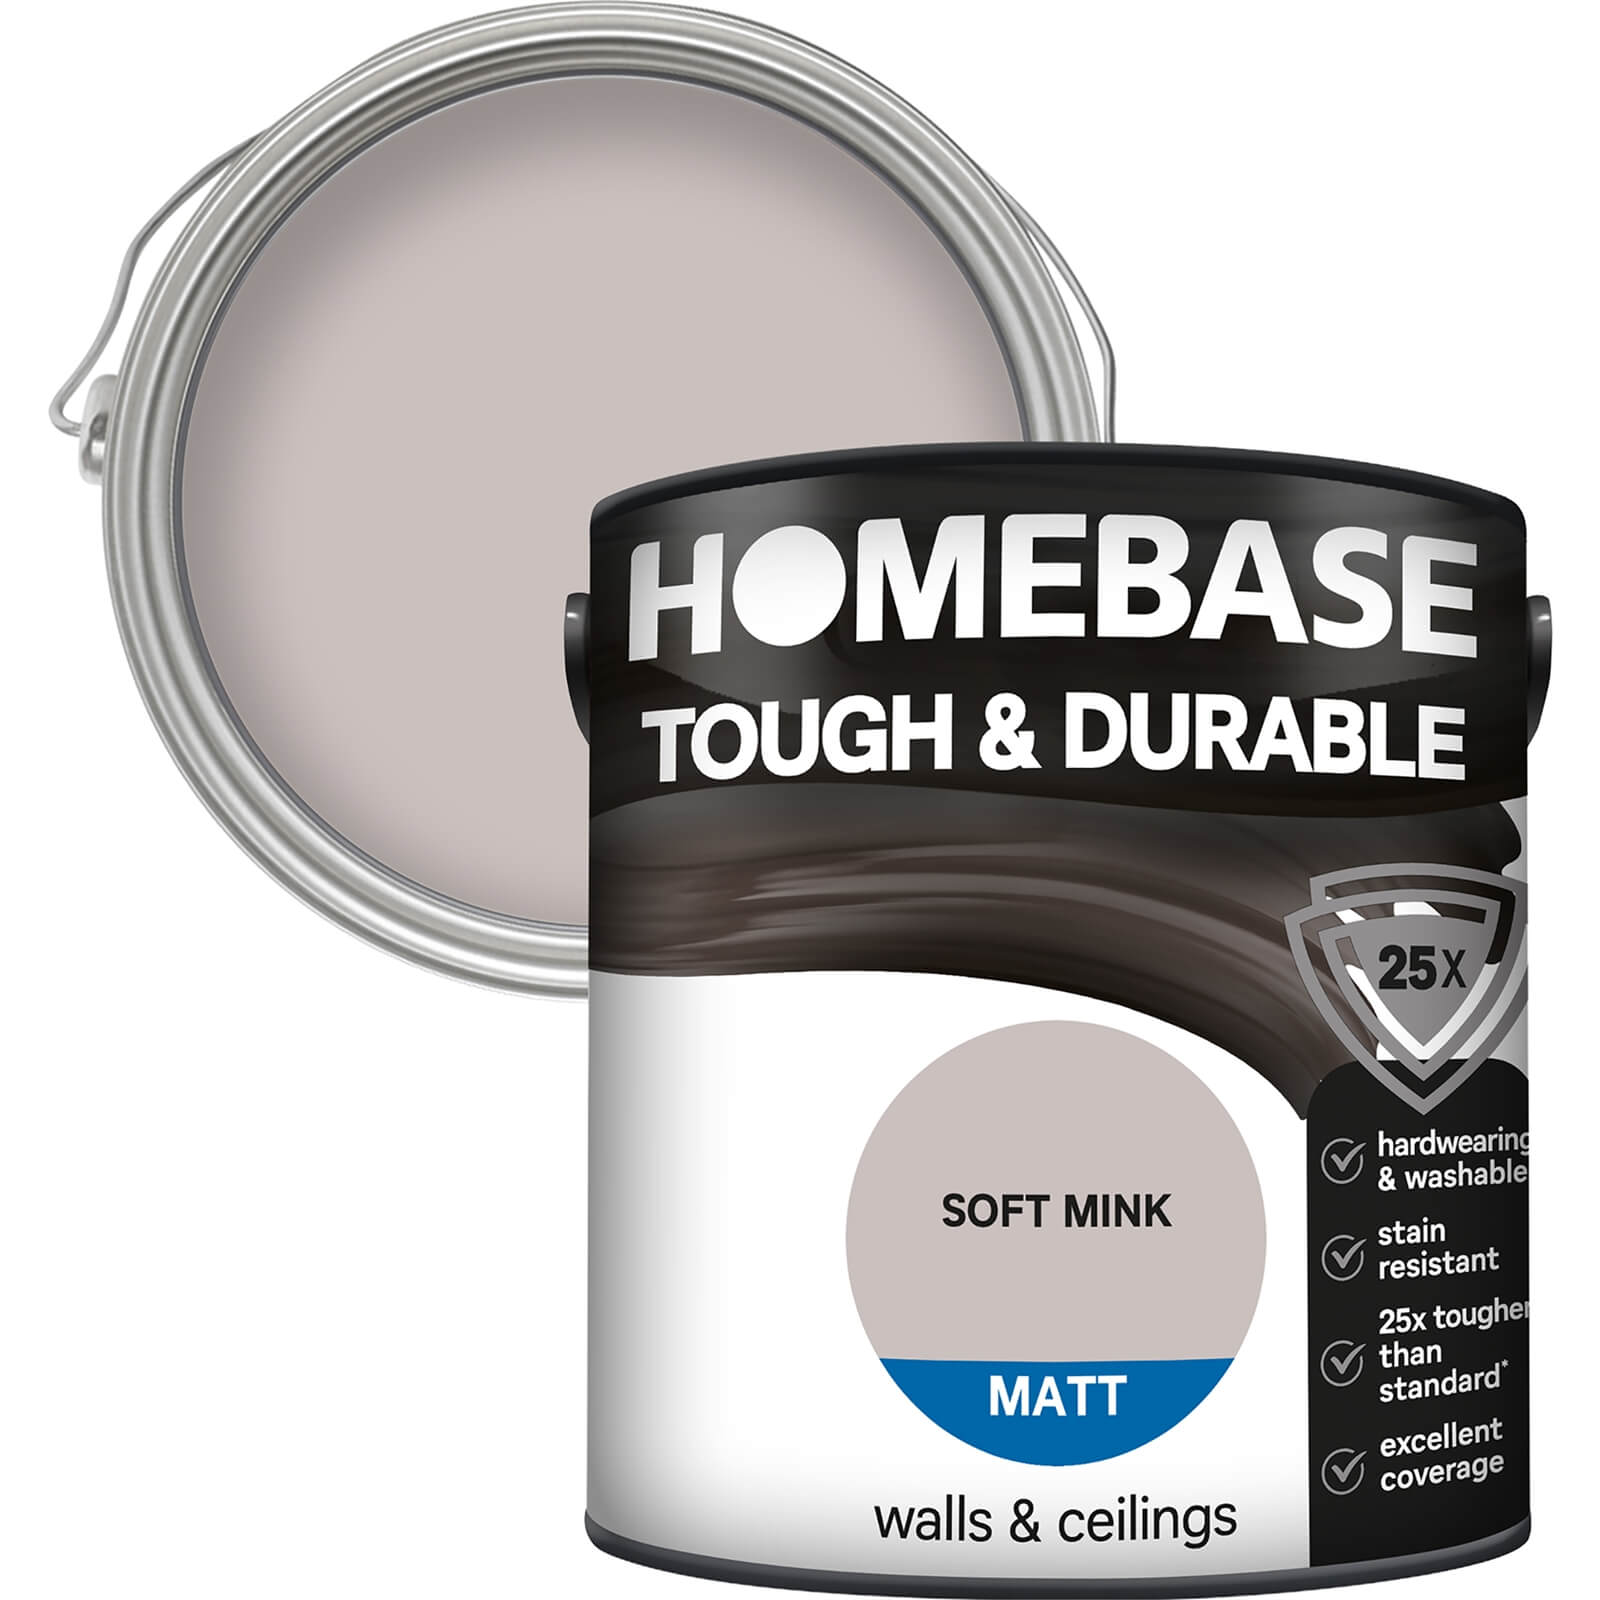 Photo of Homebase Tough & Durable Matt Paint - Soft Mink 2.5l